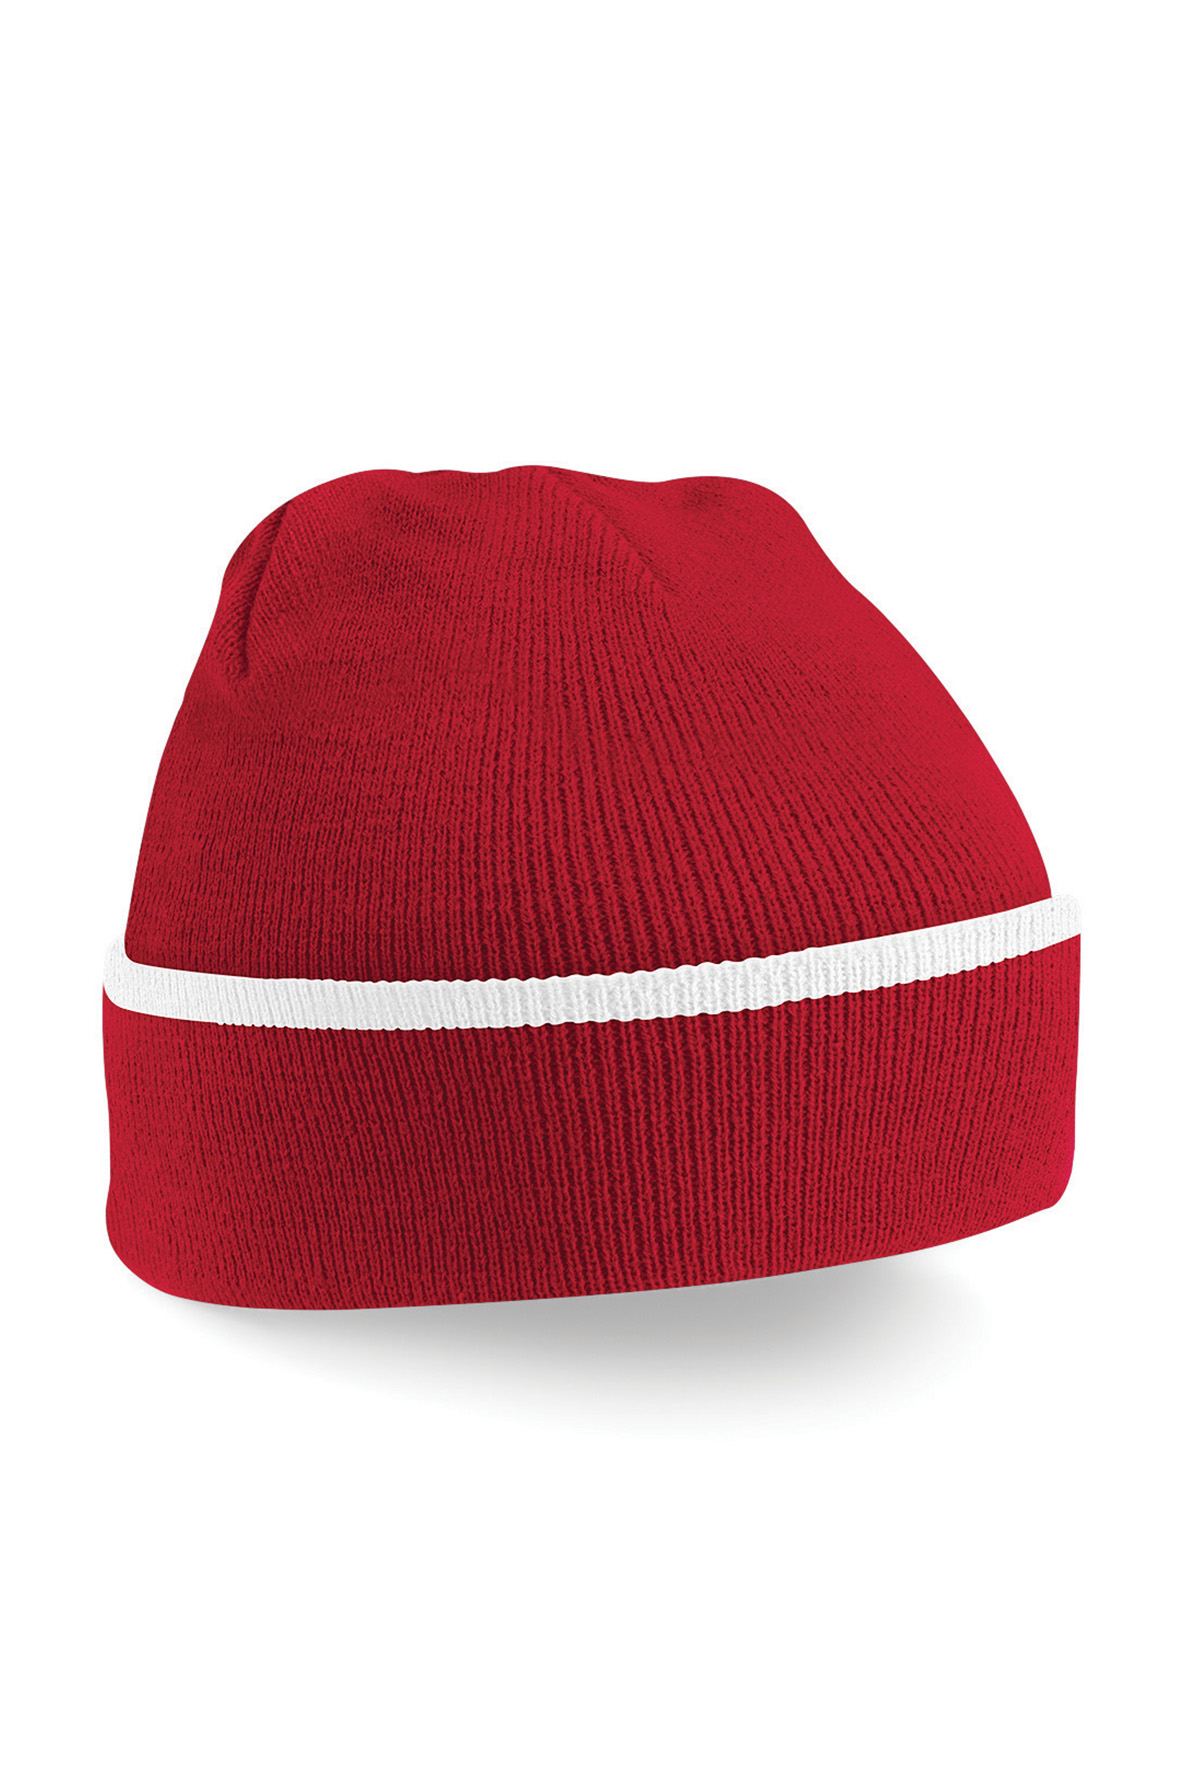 Teamwear Pipo Classic Red - Valkoinen